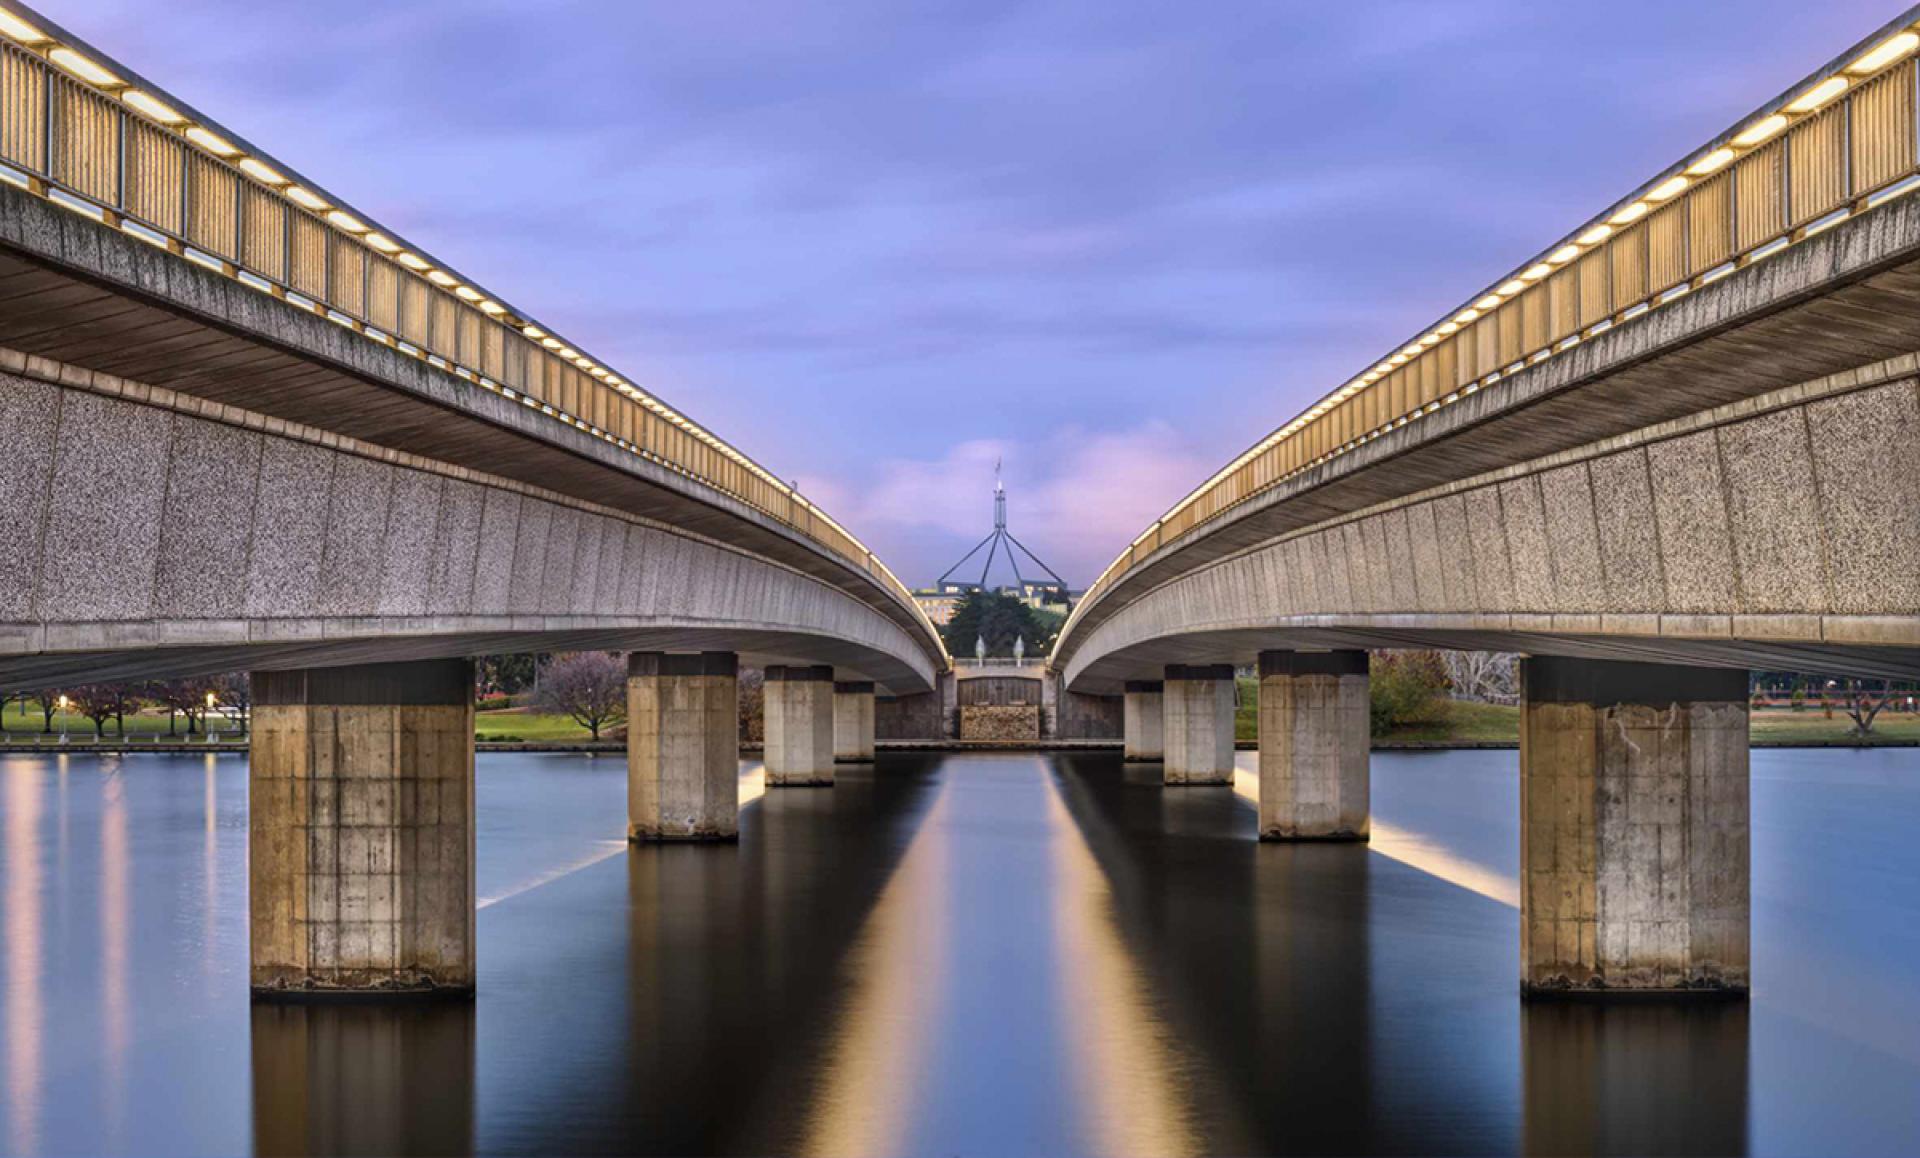 London Photography Awards Winner - Commonwealth Bridge Australia